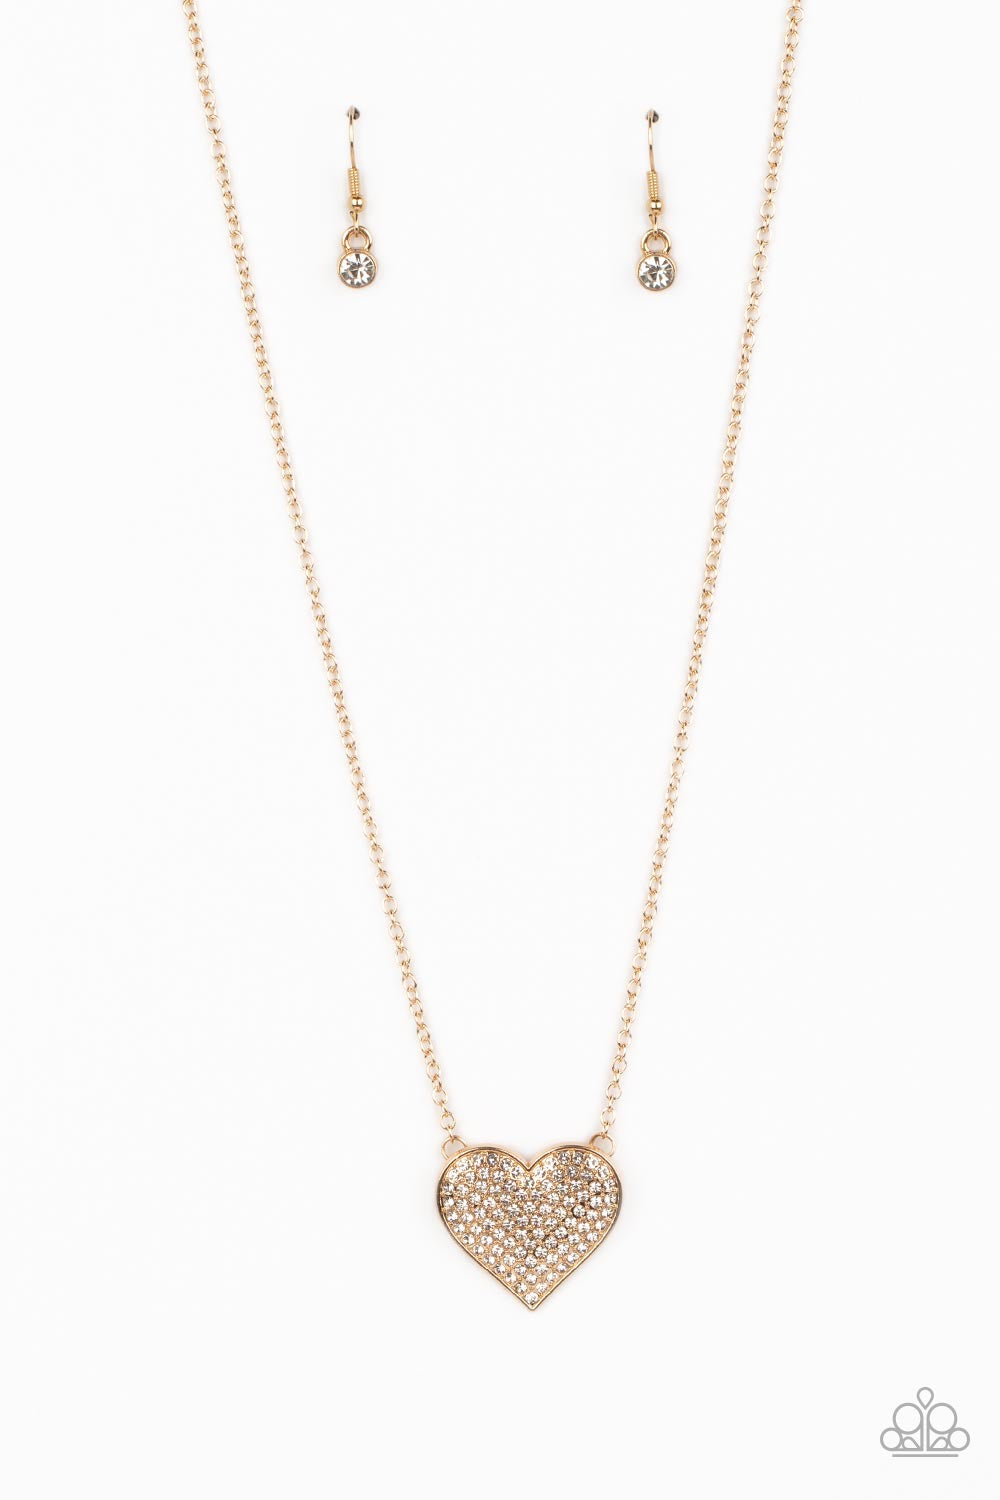 Paparazzi Spellbinding Sweetheart - Gold Necklace -Paparazzi Jewelry Images